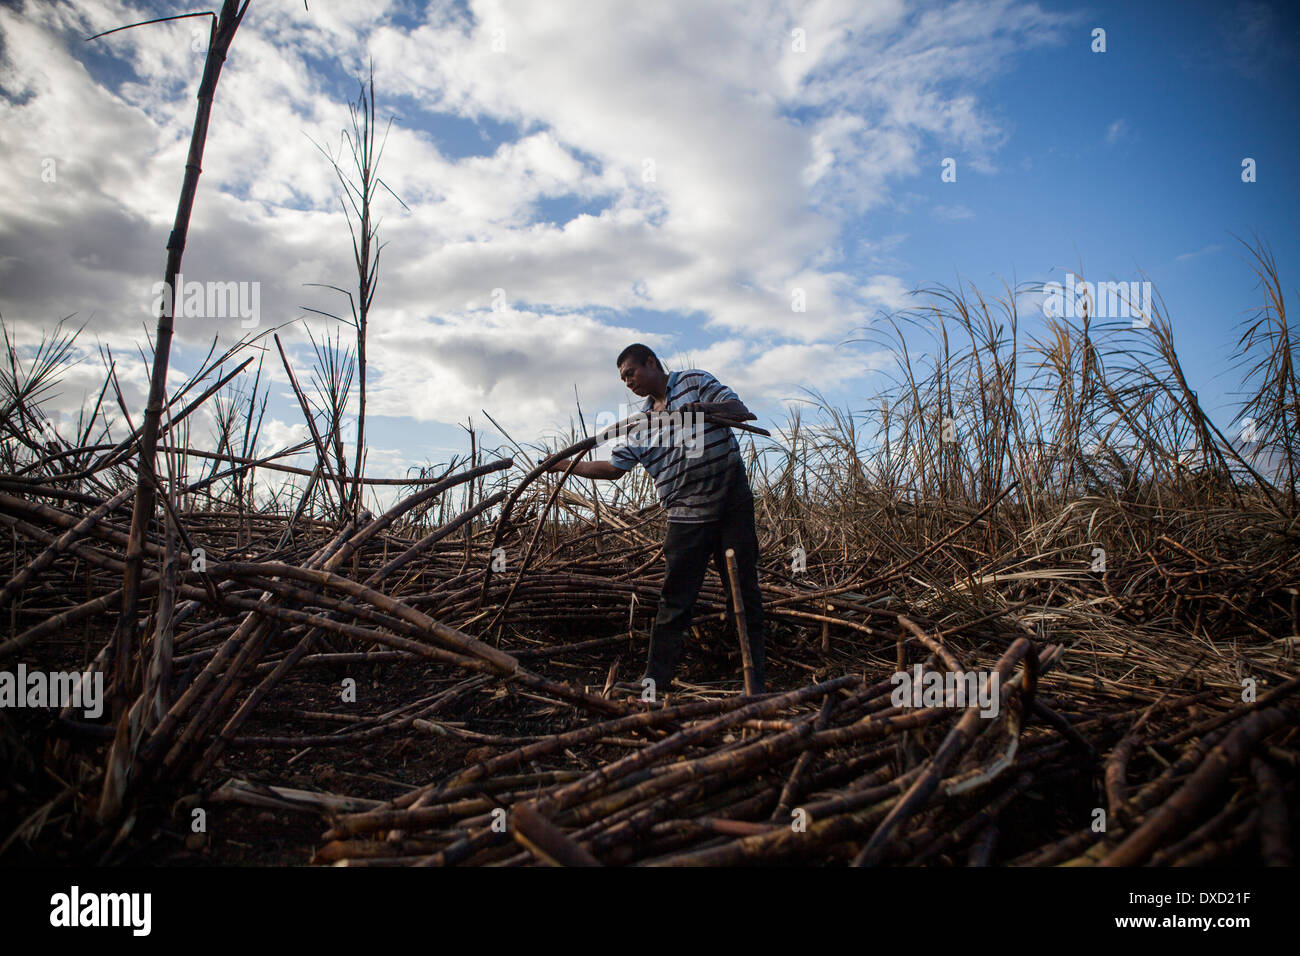 A sugar cane farmer harvests sugarcane on a plantation in Belize. The ...